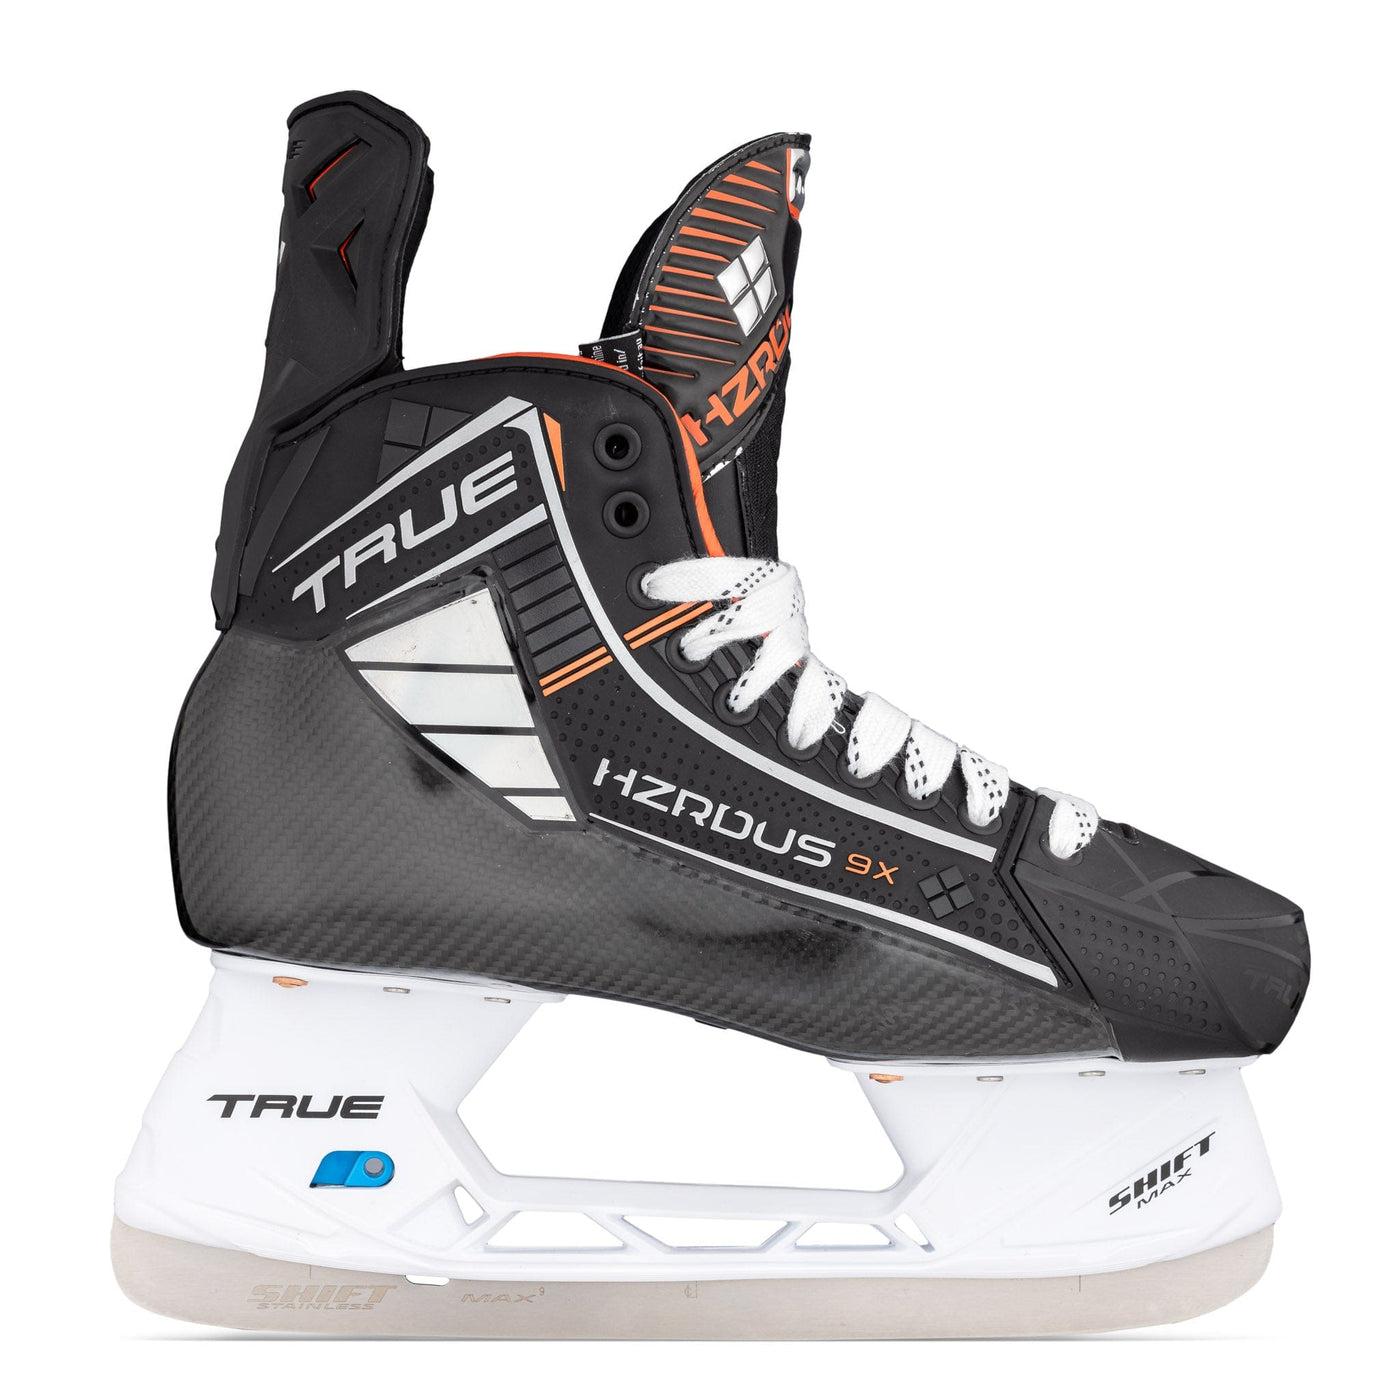 True HZRDUS 9X Intermediate Hockey Skates - The Hockey Shop Source For Sports